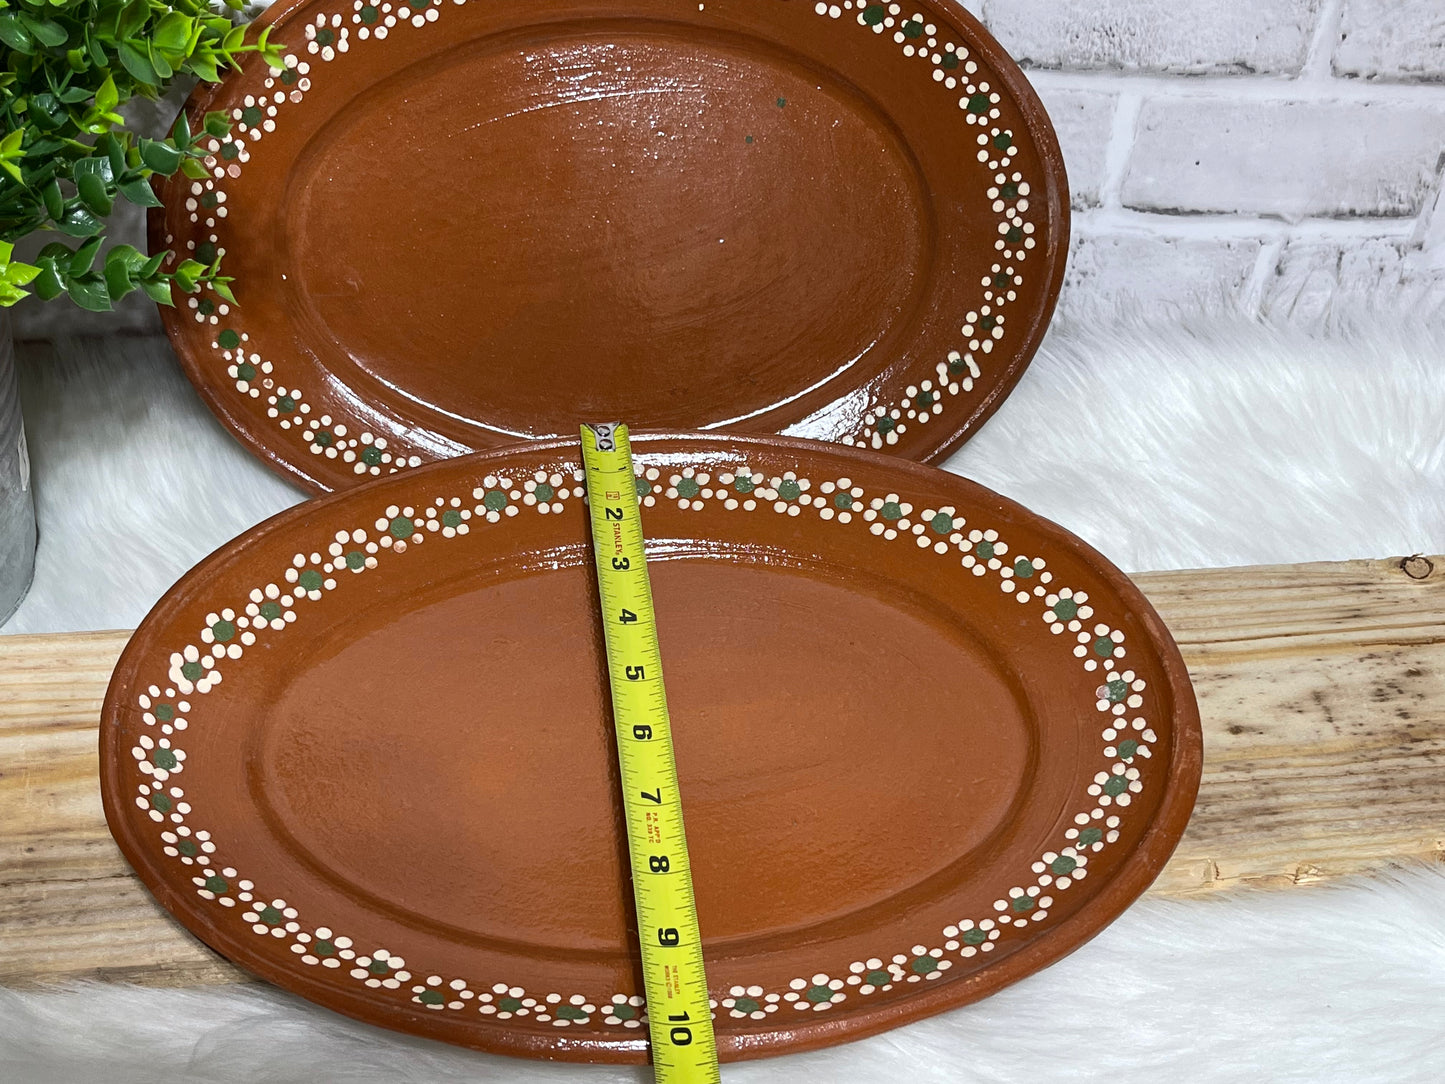 Handmade rustic 14” oval flat plate/ plato/charola de barro ovalado